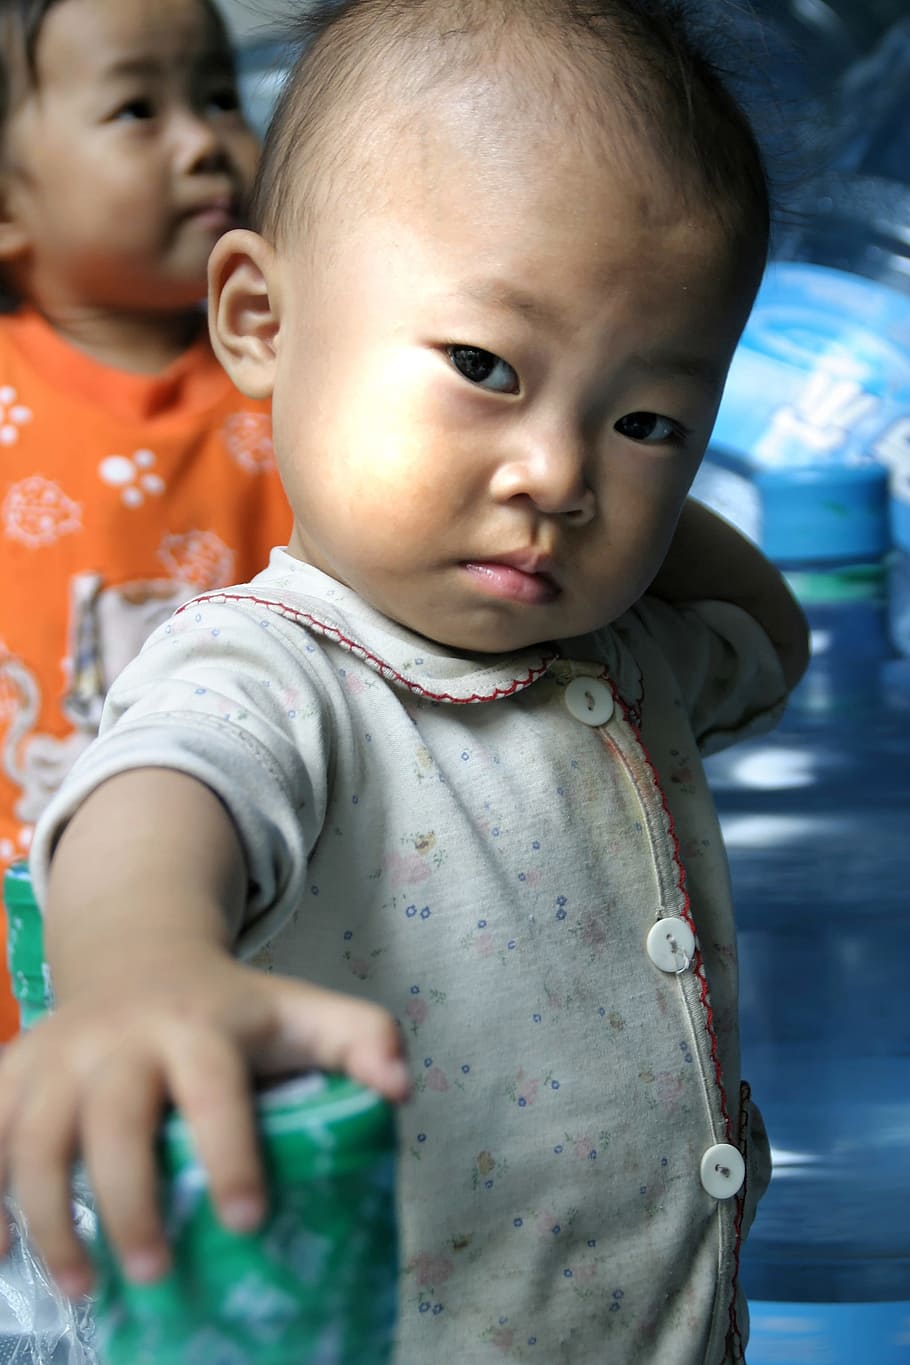 Anak-anak, Cina, Asia, bayi, hanya bayi, imut, balita, tidak bersalah, masa kanak-kanak, anak